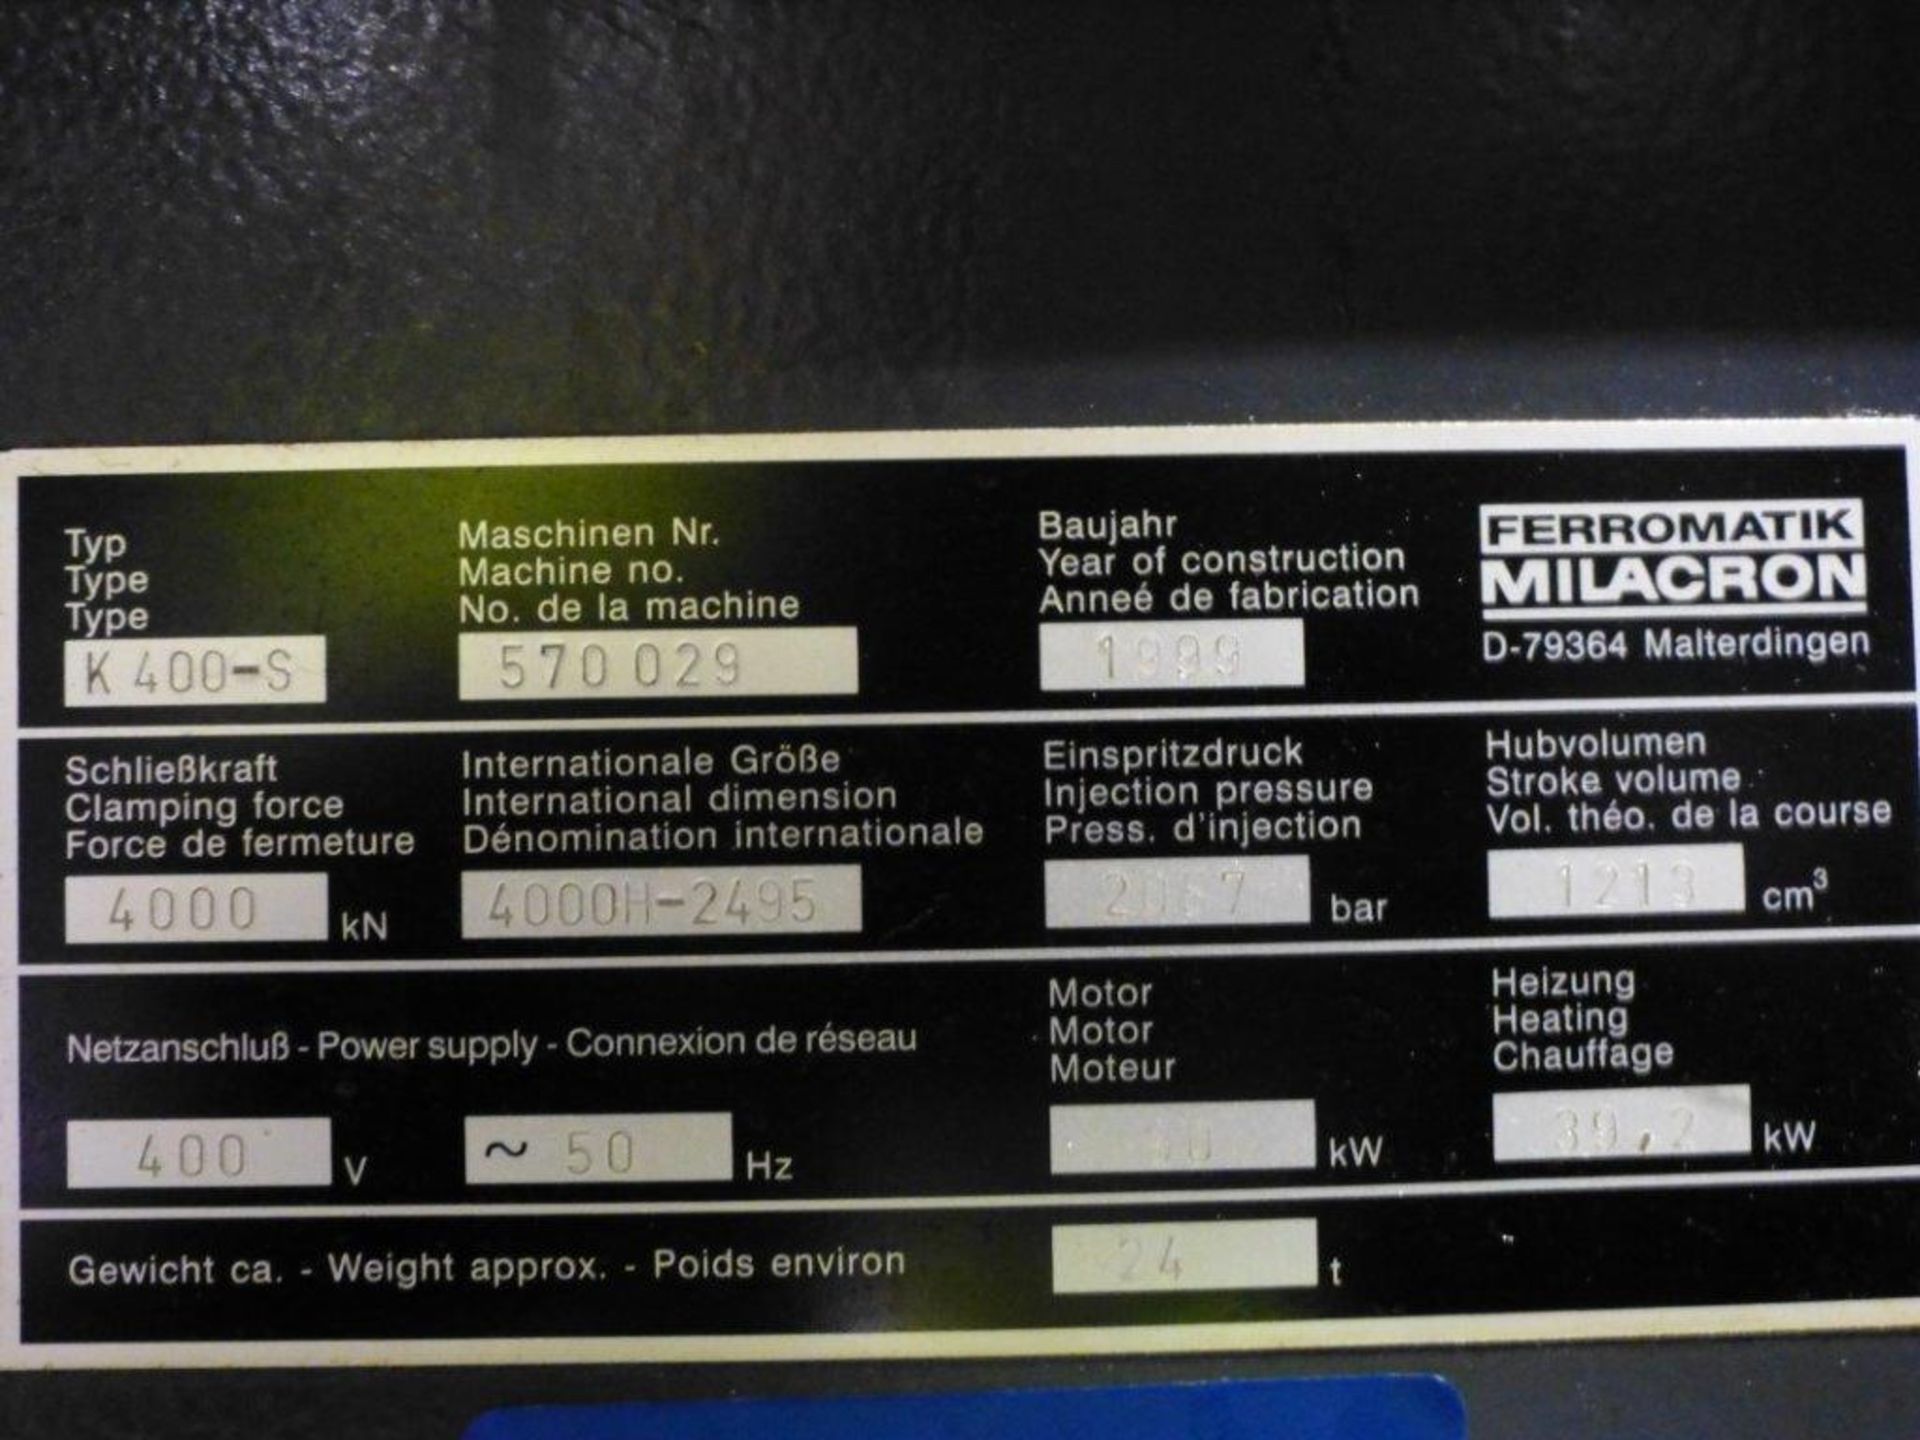 Ferromatik Milacron K400-S CNC plastic injection Moulding Machine Serial No. 570029 with 4000kN - Image 5 of 5